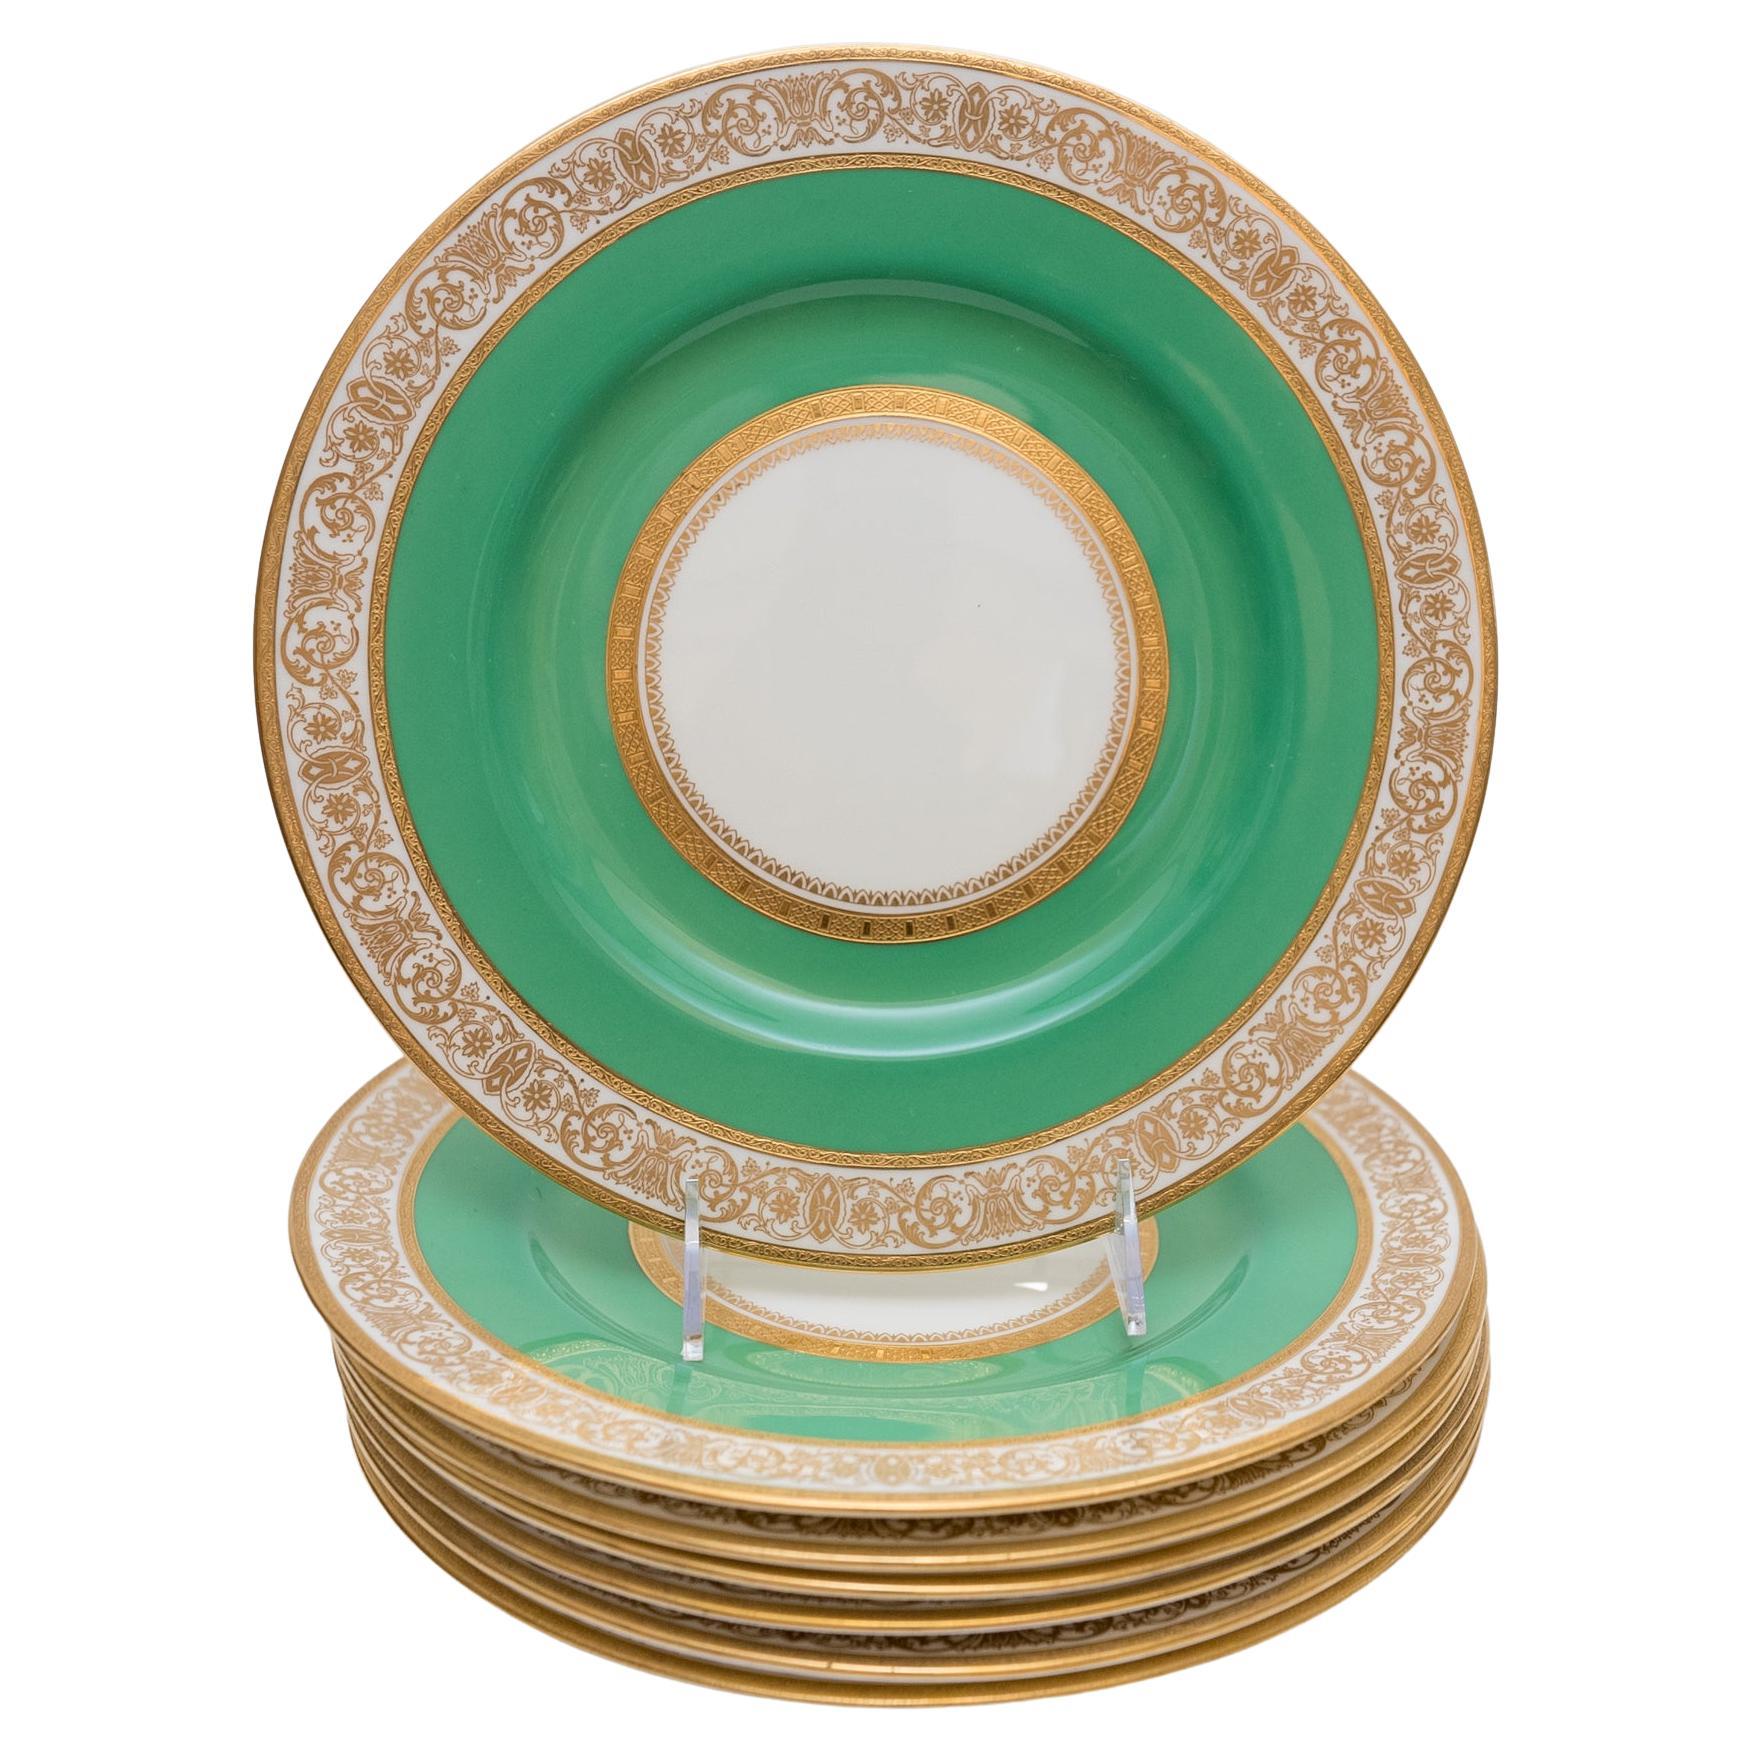 Seven Custom Antique Dinner Plates, Fine Gold Design on Green Ground. English 